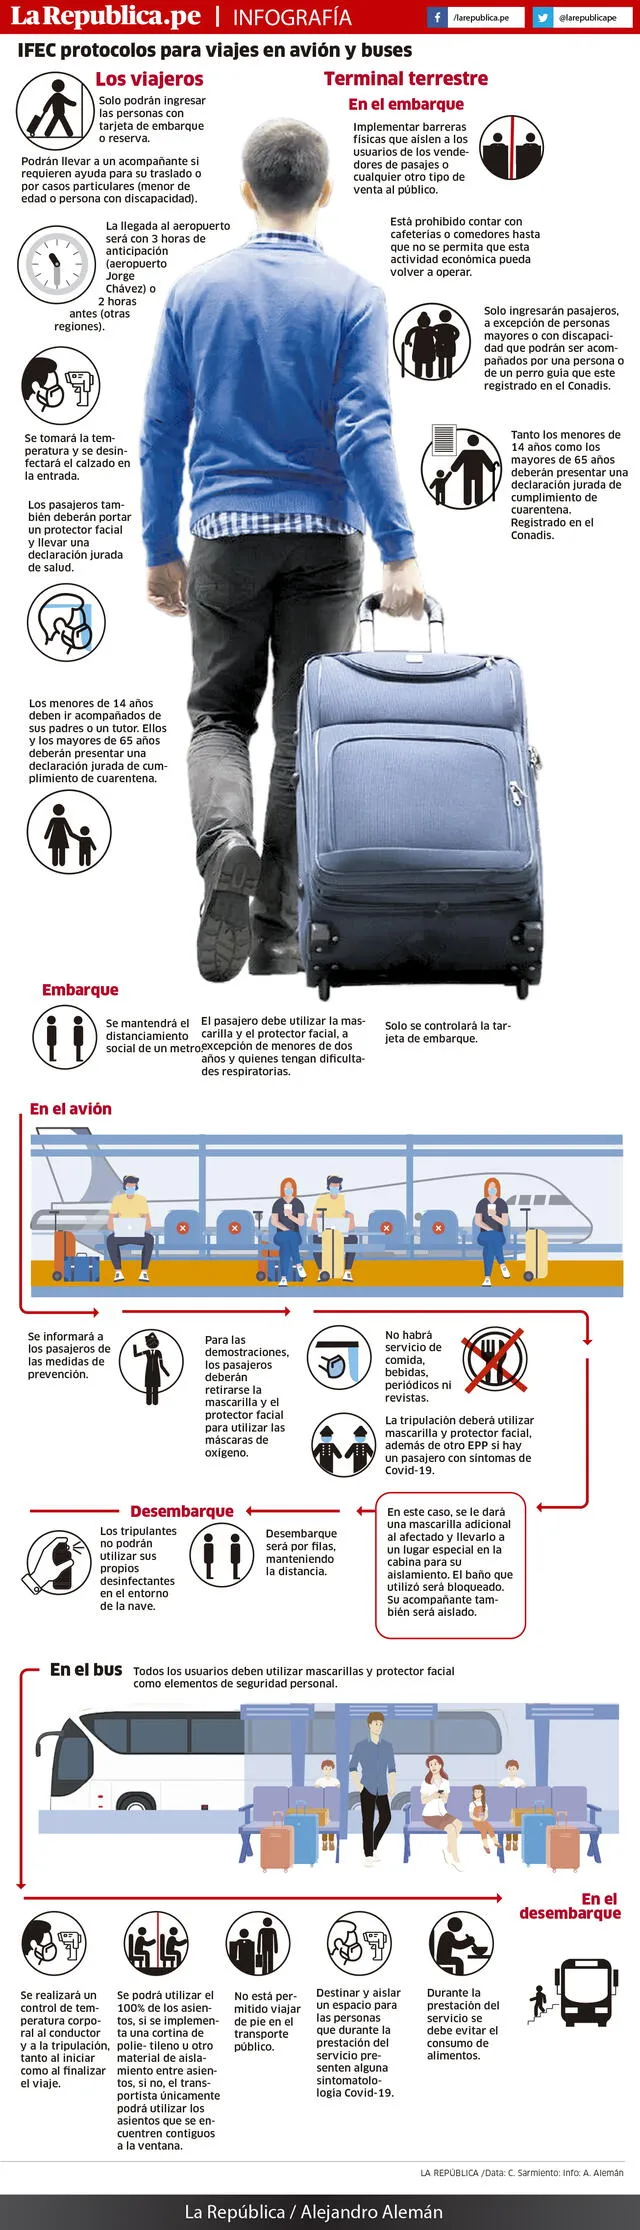 infografia protocolos para viajes avion y buses